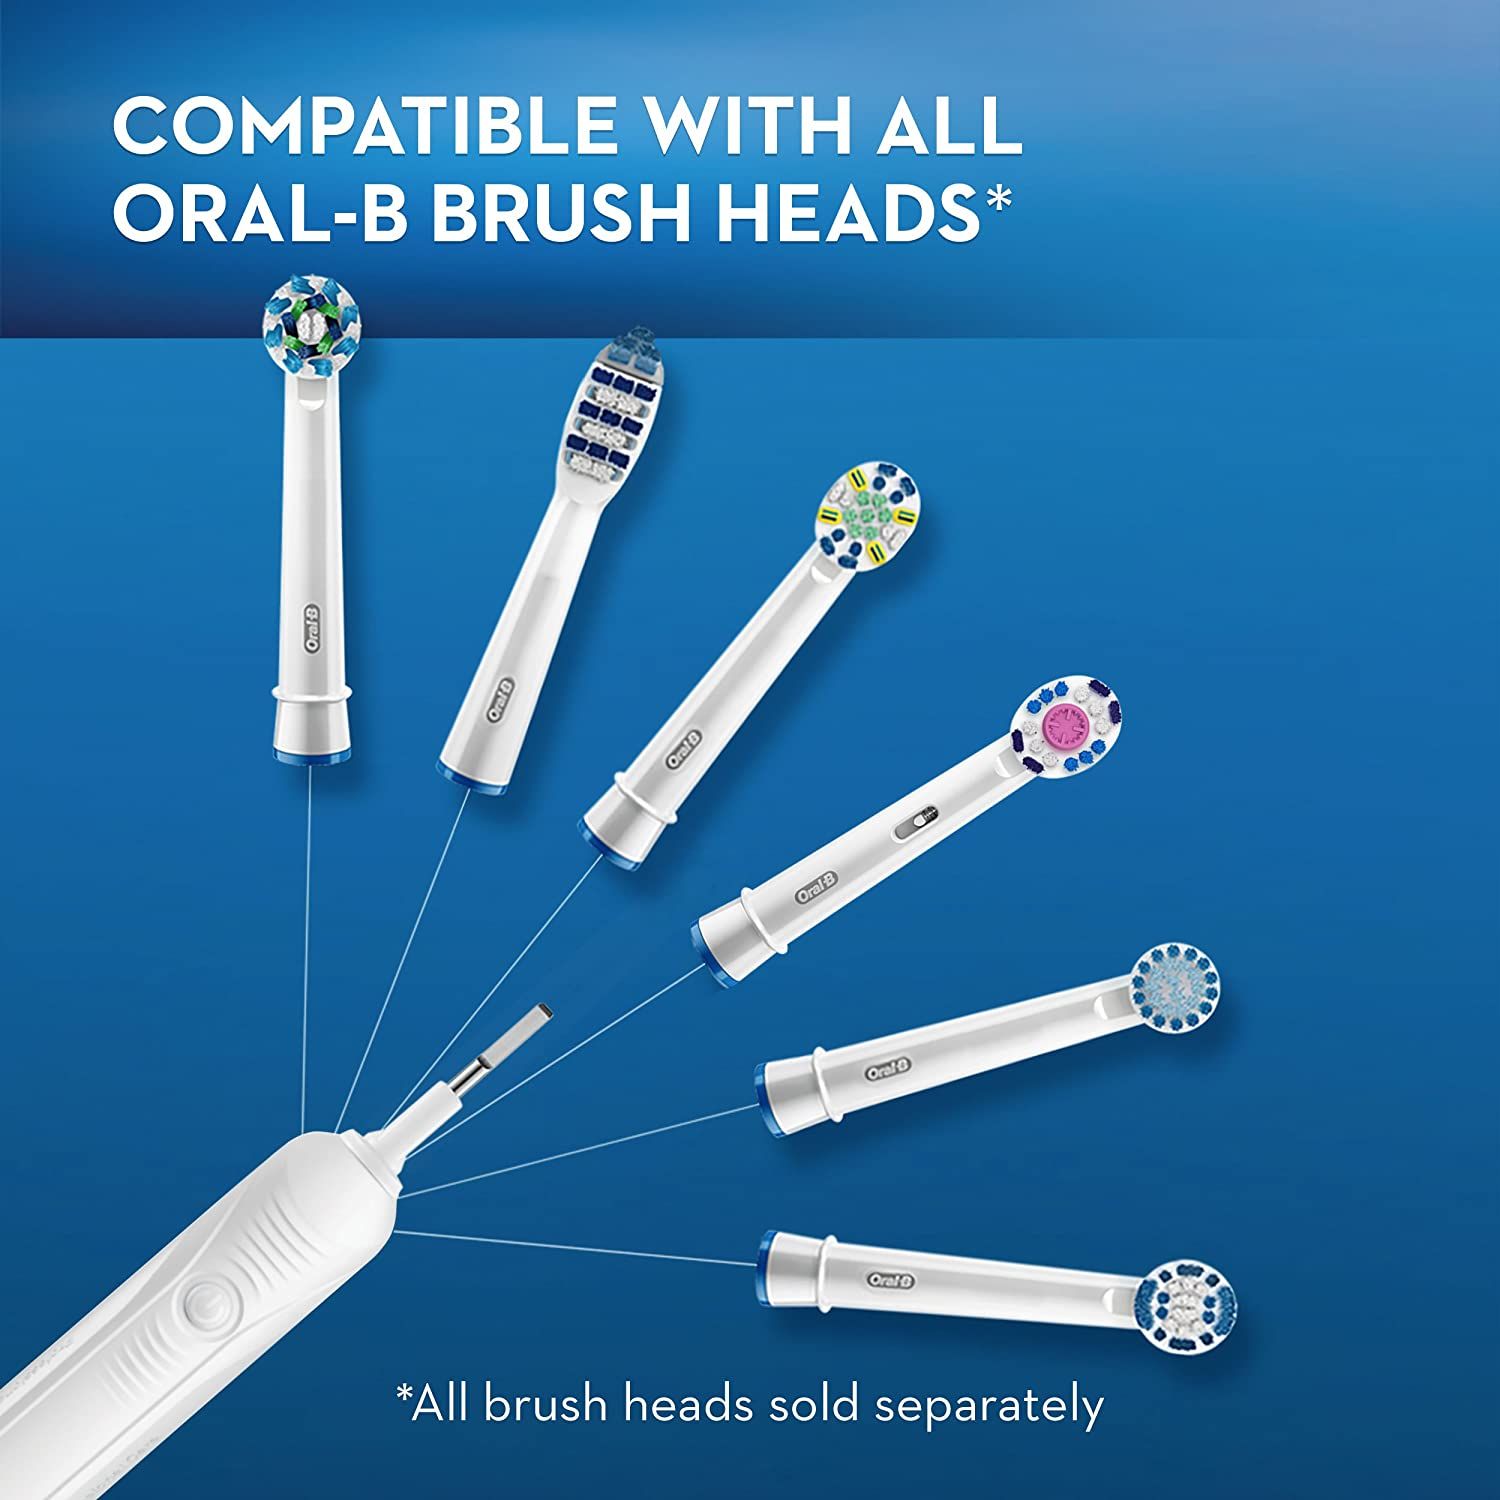 Oral-B White Pro 1000 brush head options